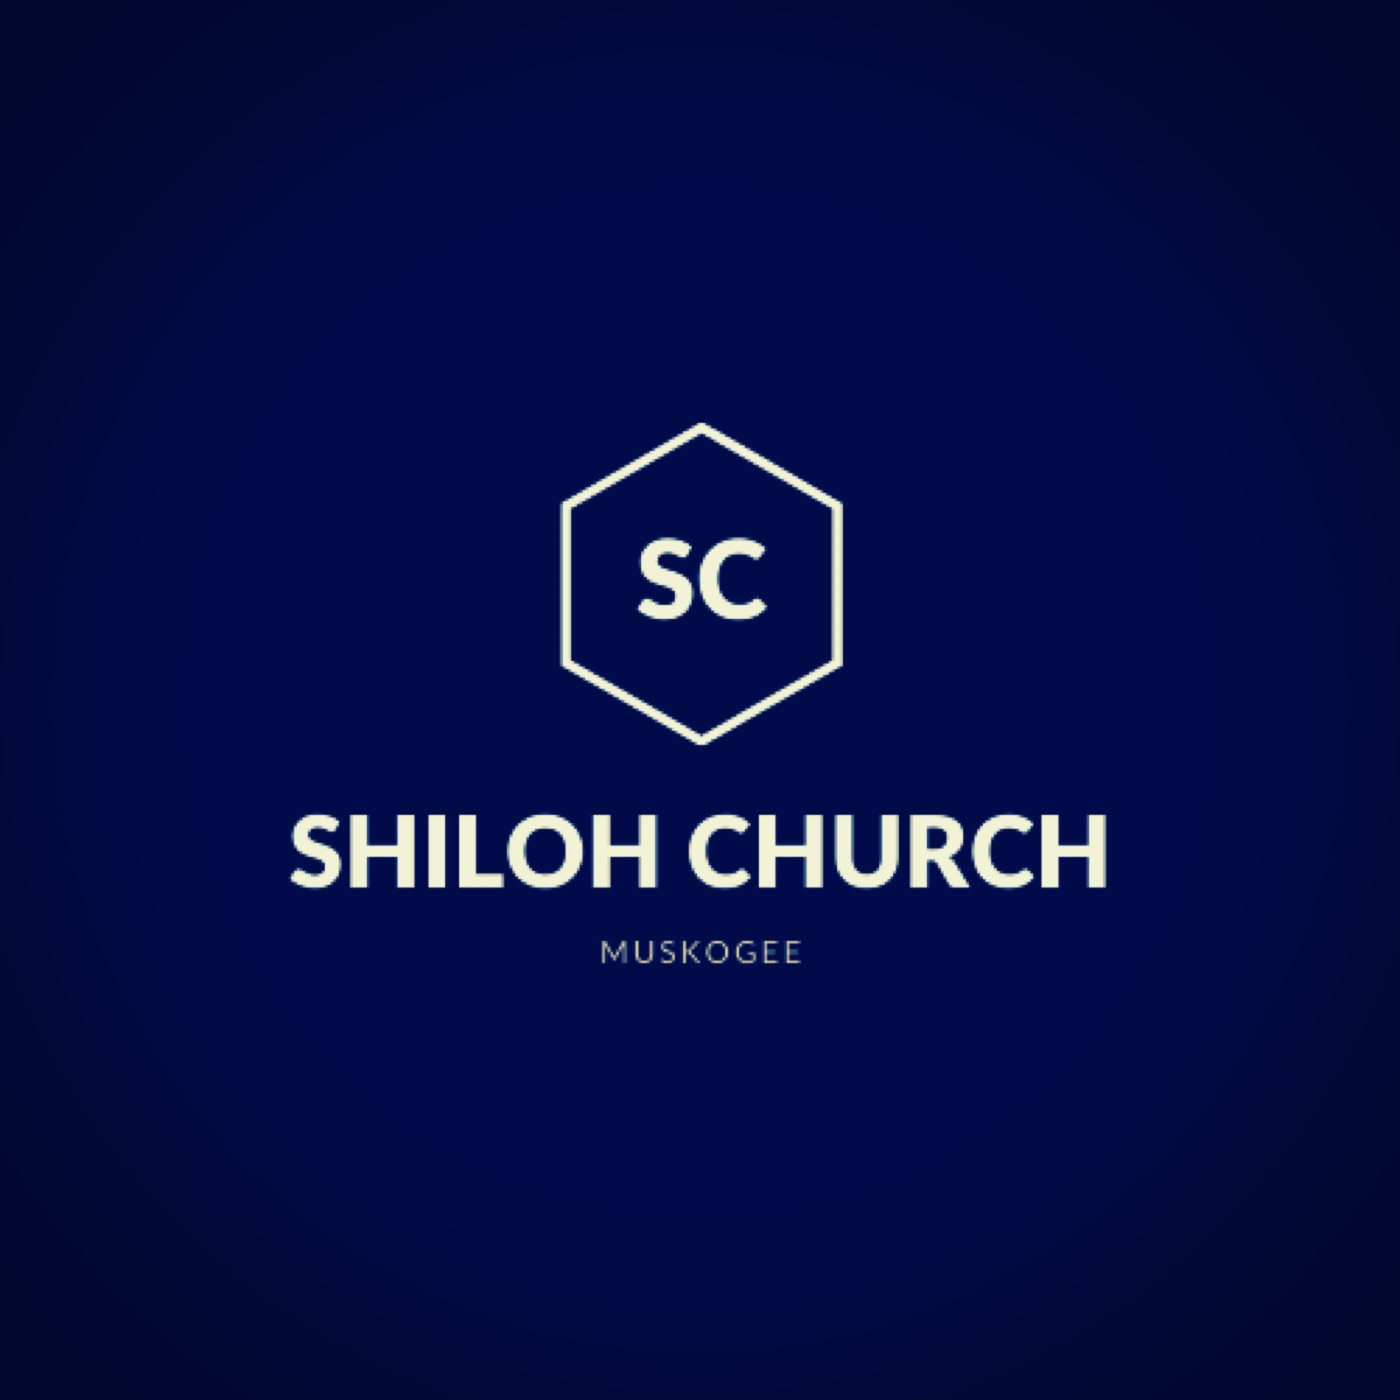 Shiloh Church Muskogee